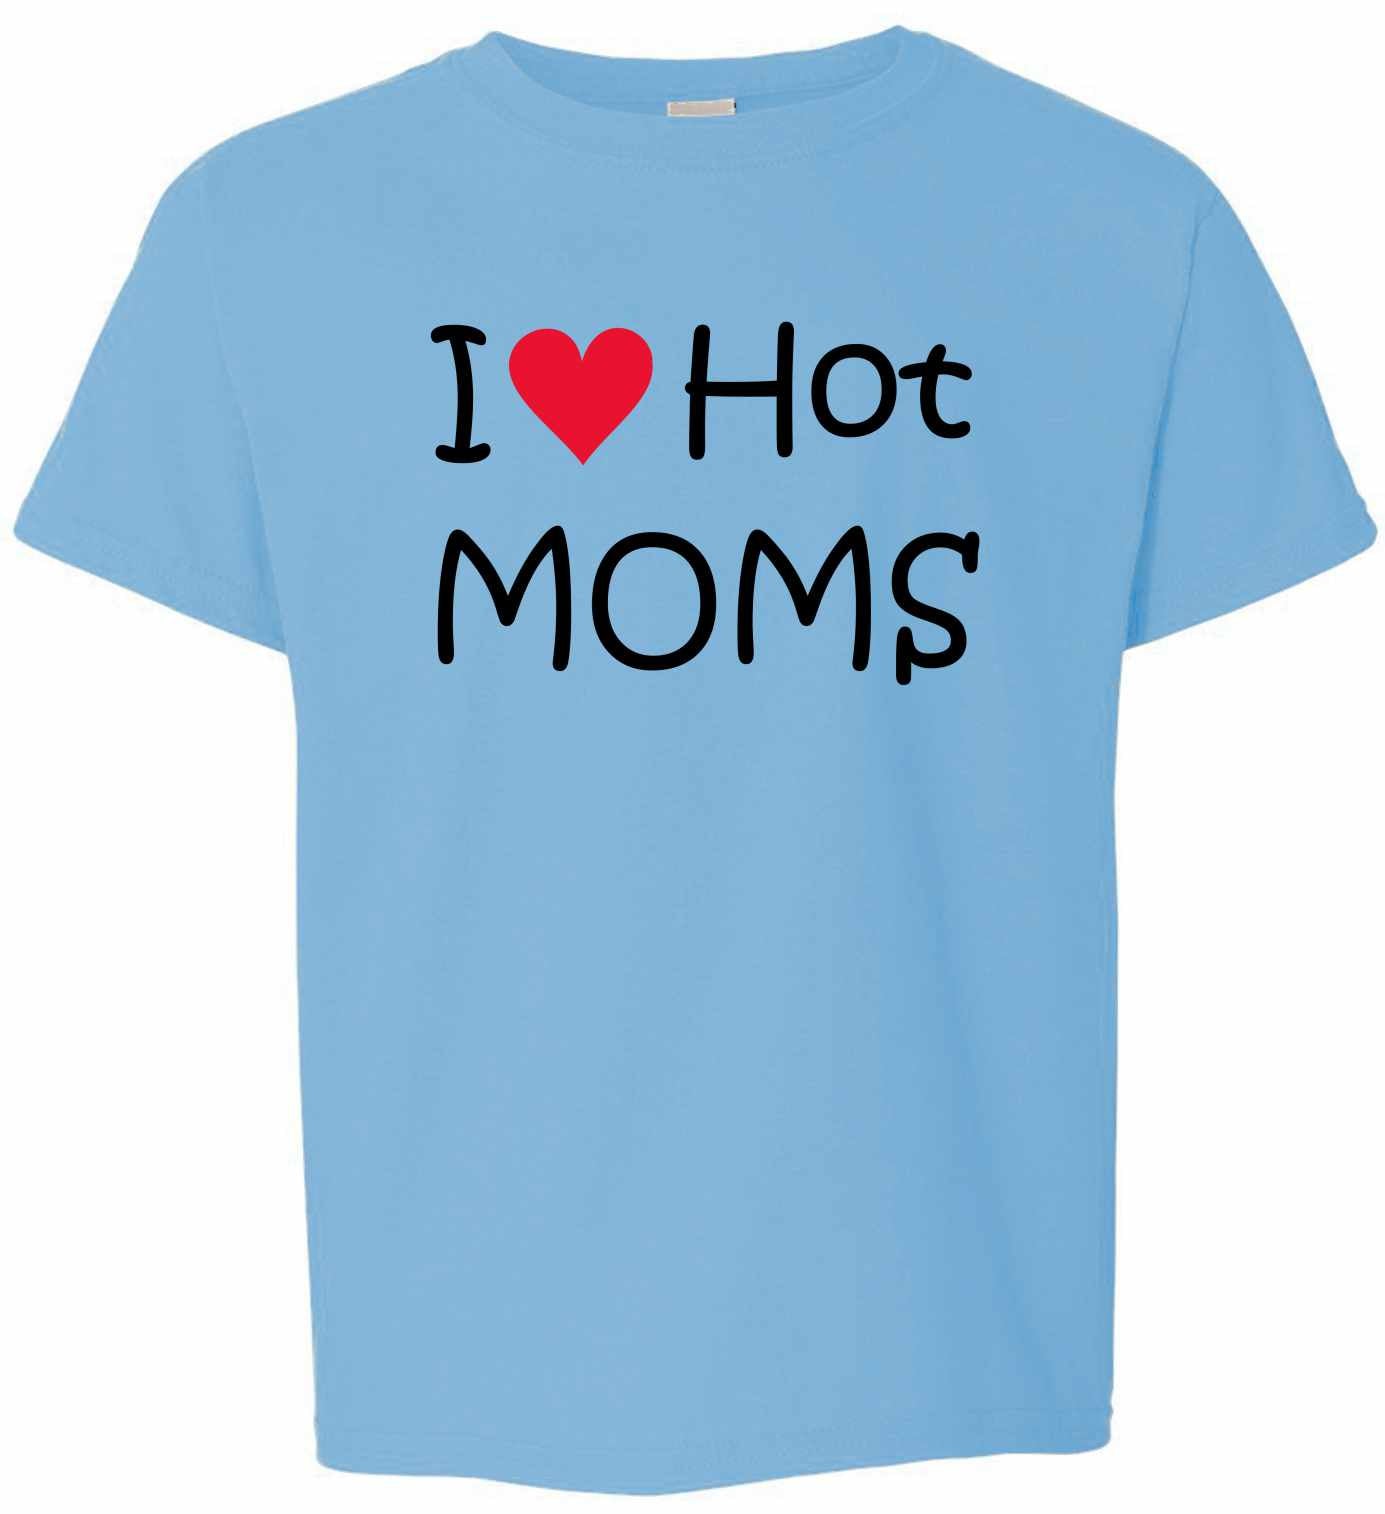 I LOVE HOT MOMS on Kids T-Shirt